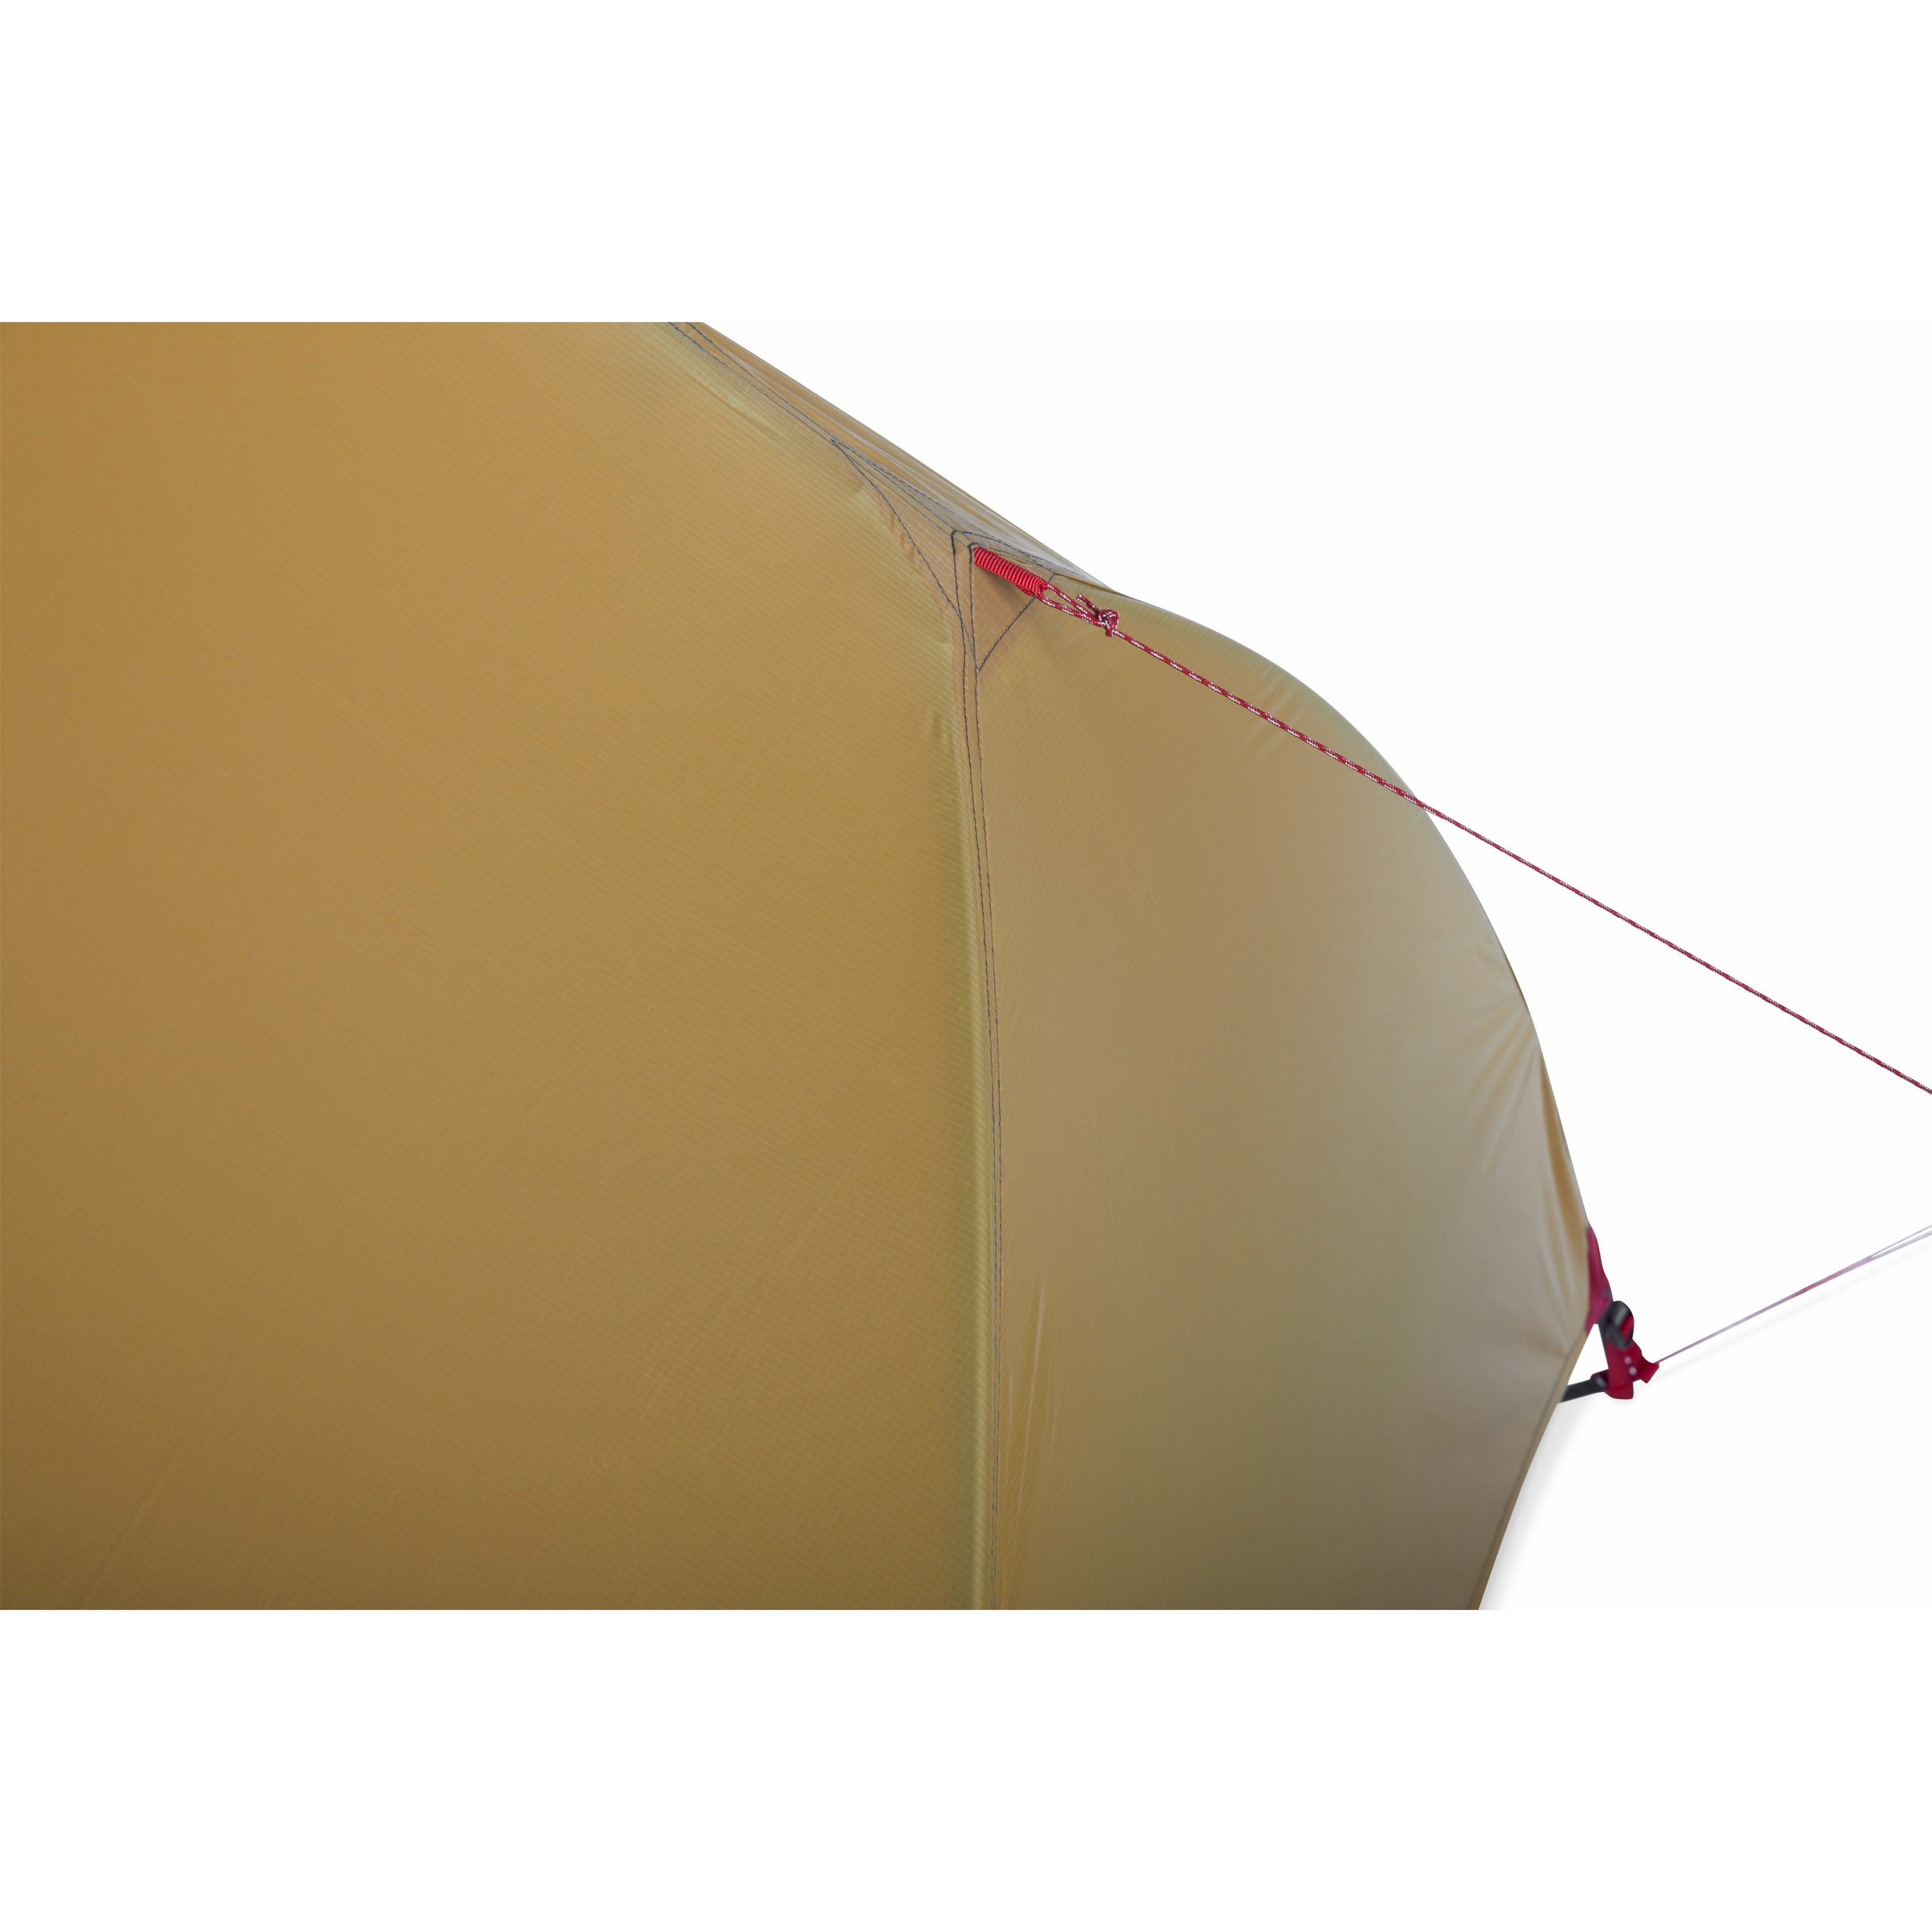 Hubba Hubba 2 - אוהל תרמילאים אולטראלייט לשני אנשים דגם 2022